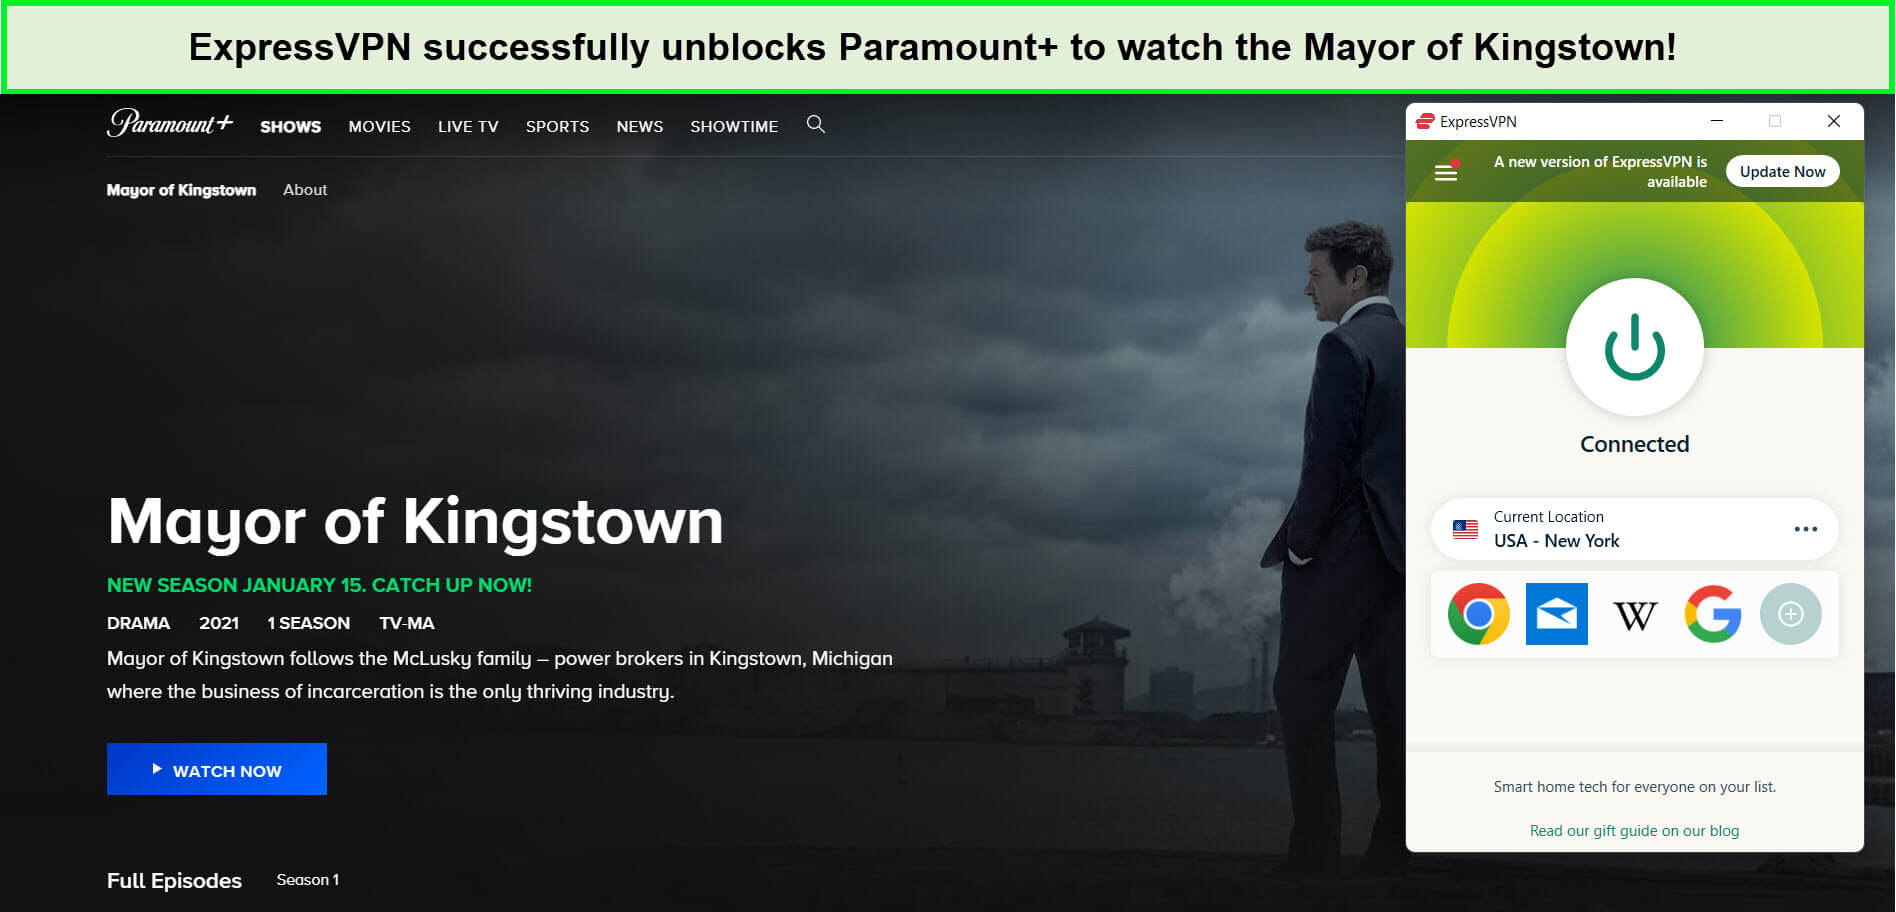 expressvpn-unblocks-paramount-plus-for-mayor-of-kingstown-outside-usa